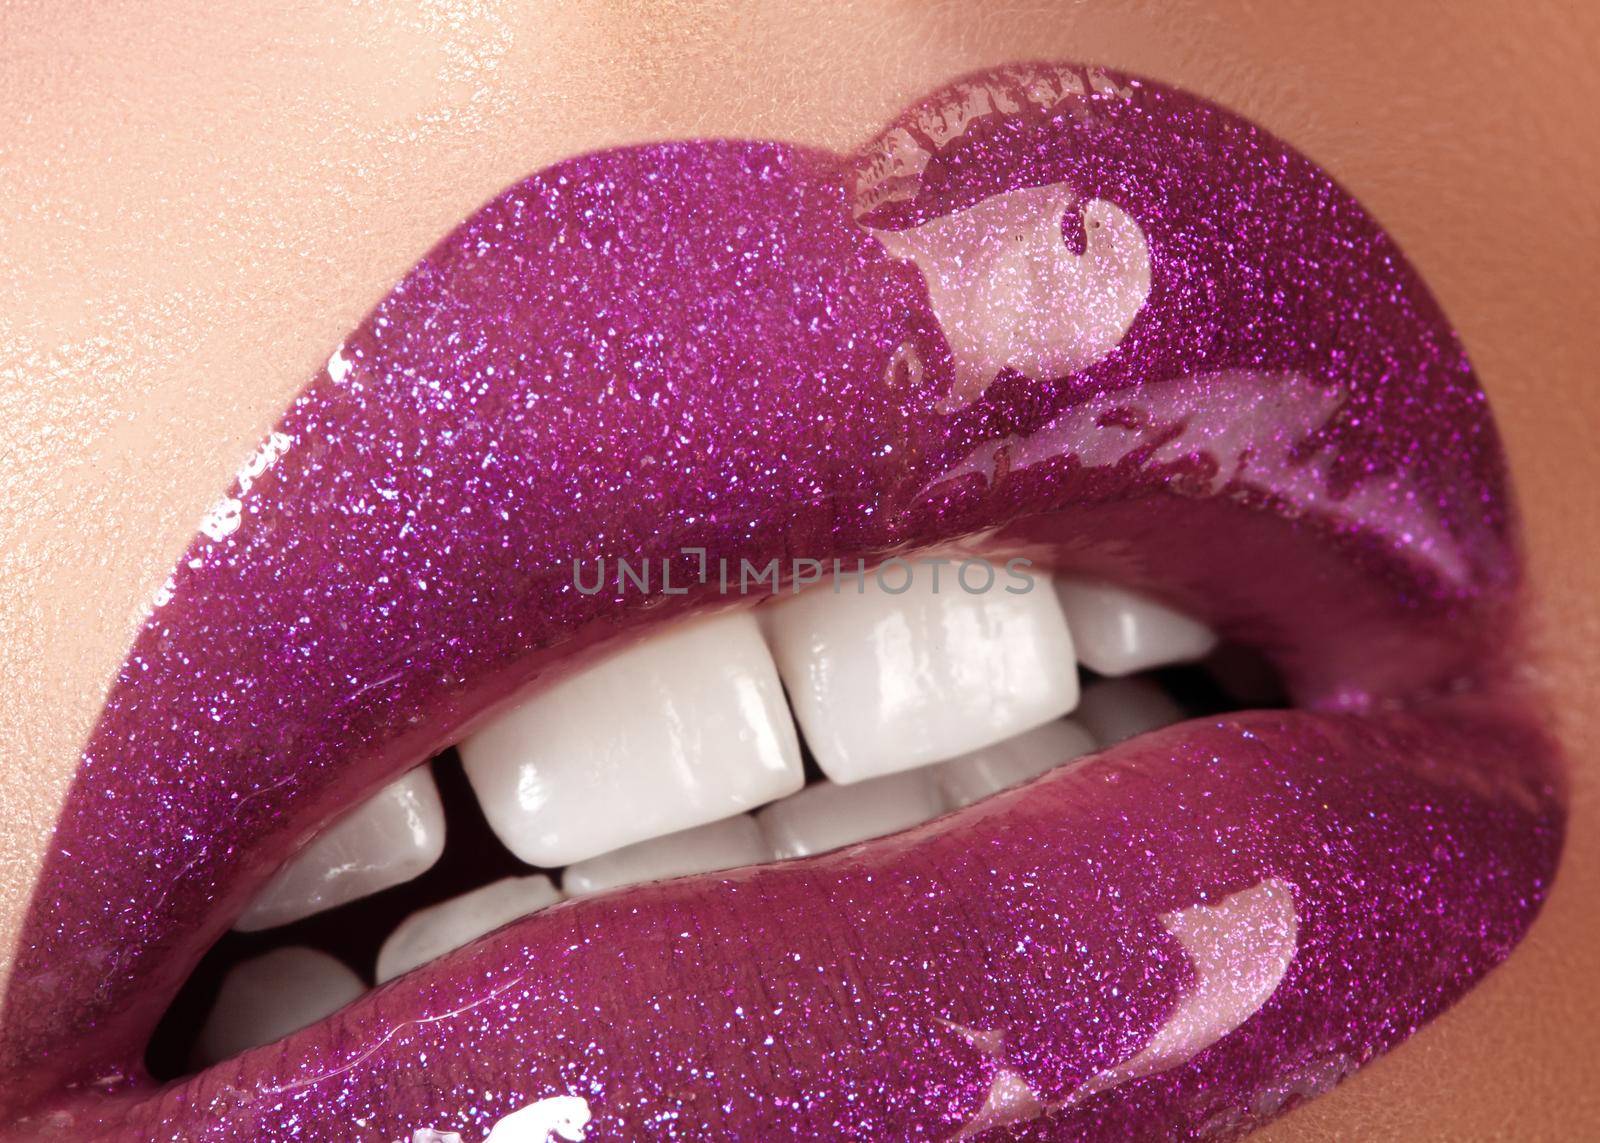 Glamour Magenta Gloss Lip Make-up. Fashion Makeup Beauty Shot. Close-up Female Sexy Full Lips with Celebrate Pink Gloss.